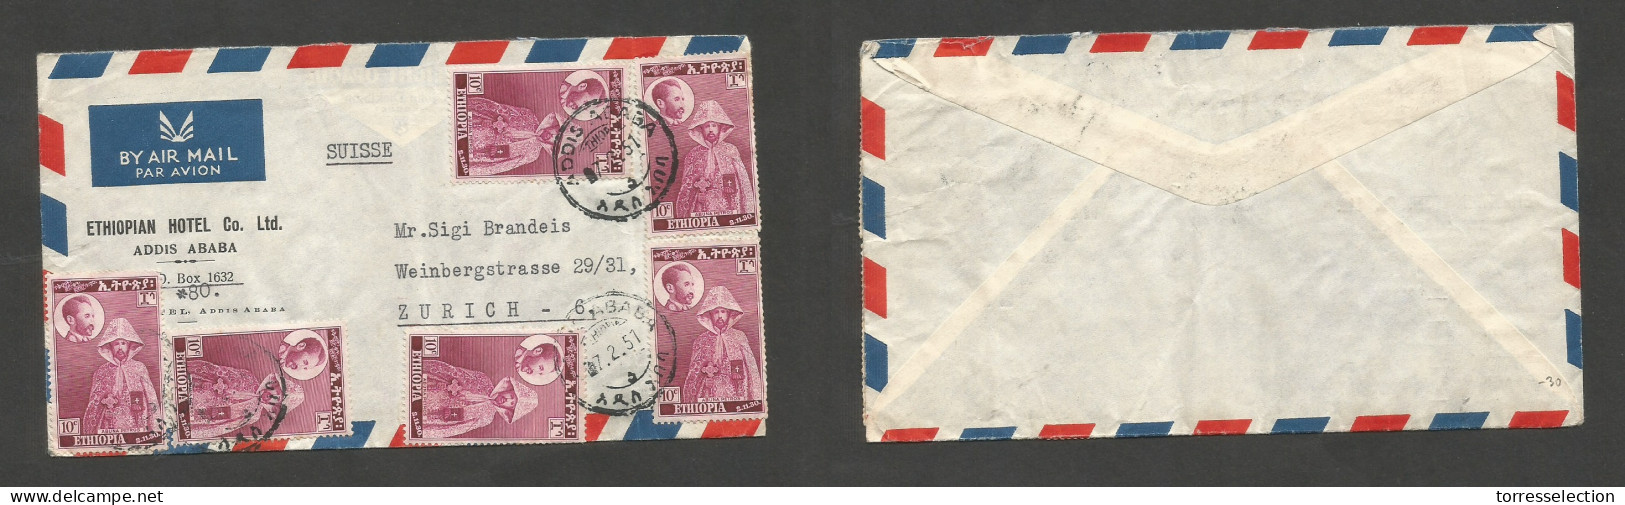 ETHIOPIA. 1951 (7 Febr) Addis Ababa - Zurich, Switzerland. Air Multifkd Env, Tied Cds, At 60c Rate. V. Appealing. SALE. - Äthiopien